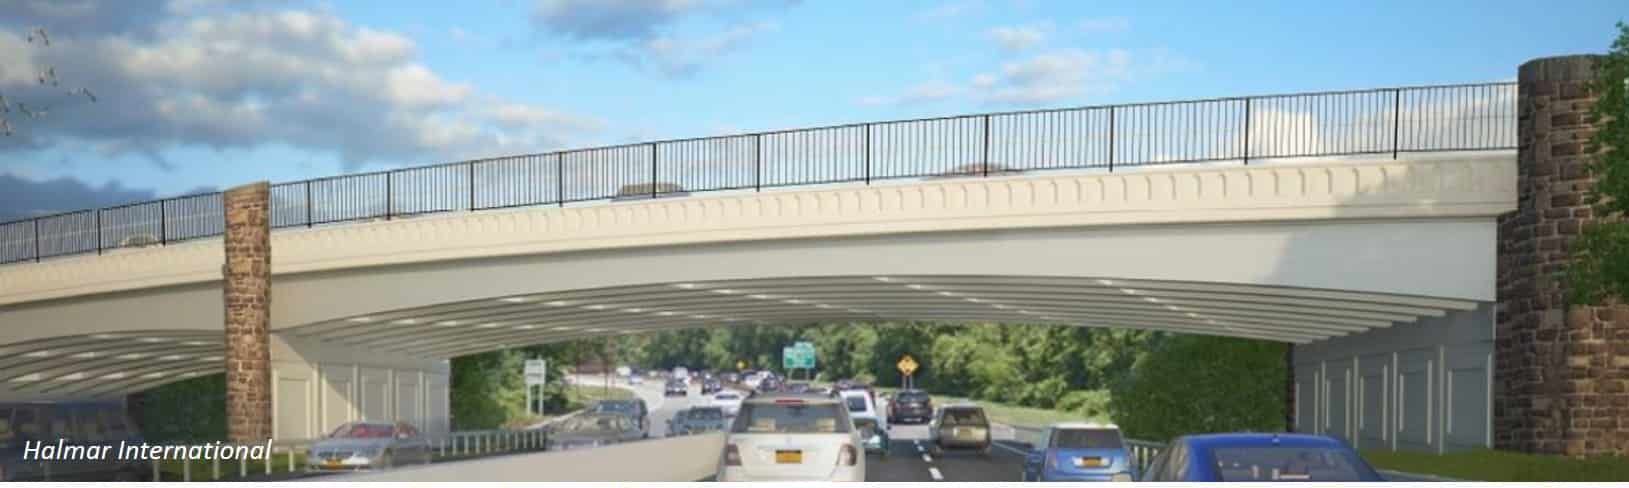 Bridges for NYSDOT Design Build in Lower Westchester Rendering